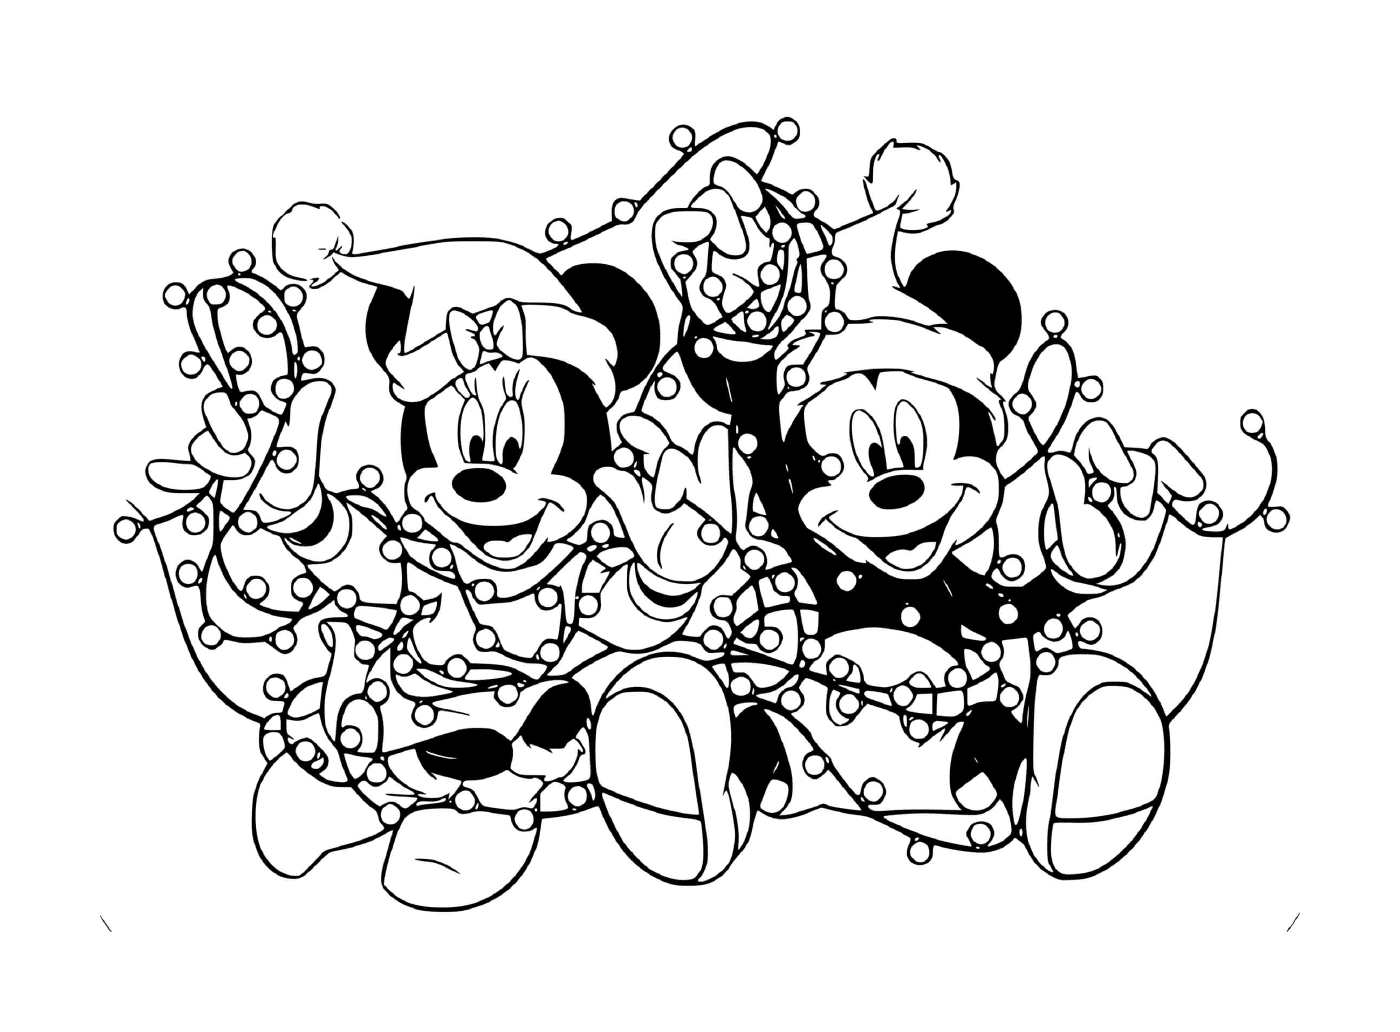  Mickey e Minnie enredados nas luzes 